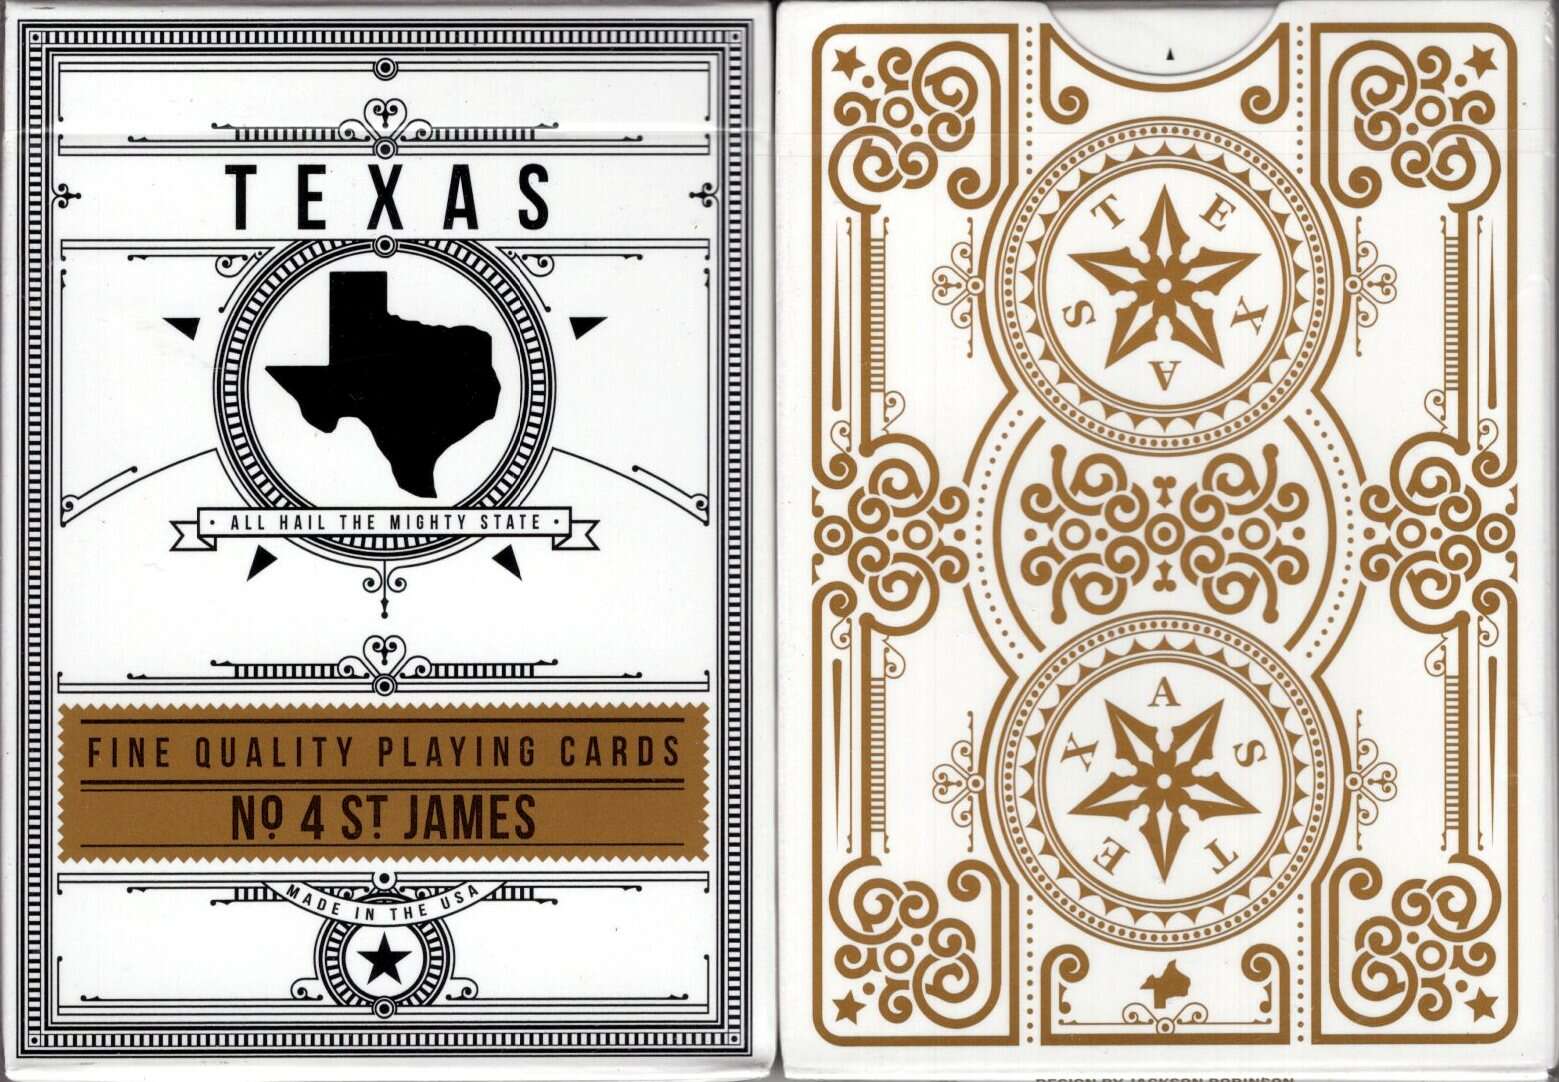 PlayingCardDecks.com-No. 4 St. James Texas Playing Cards White